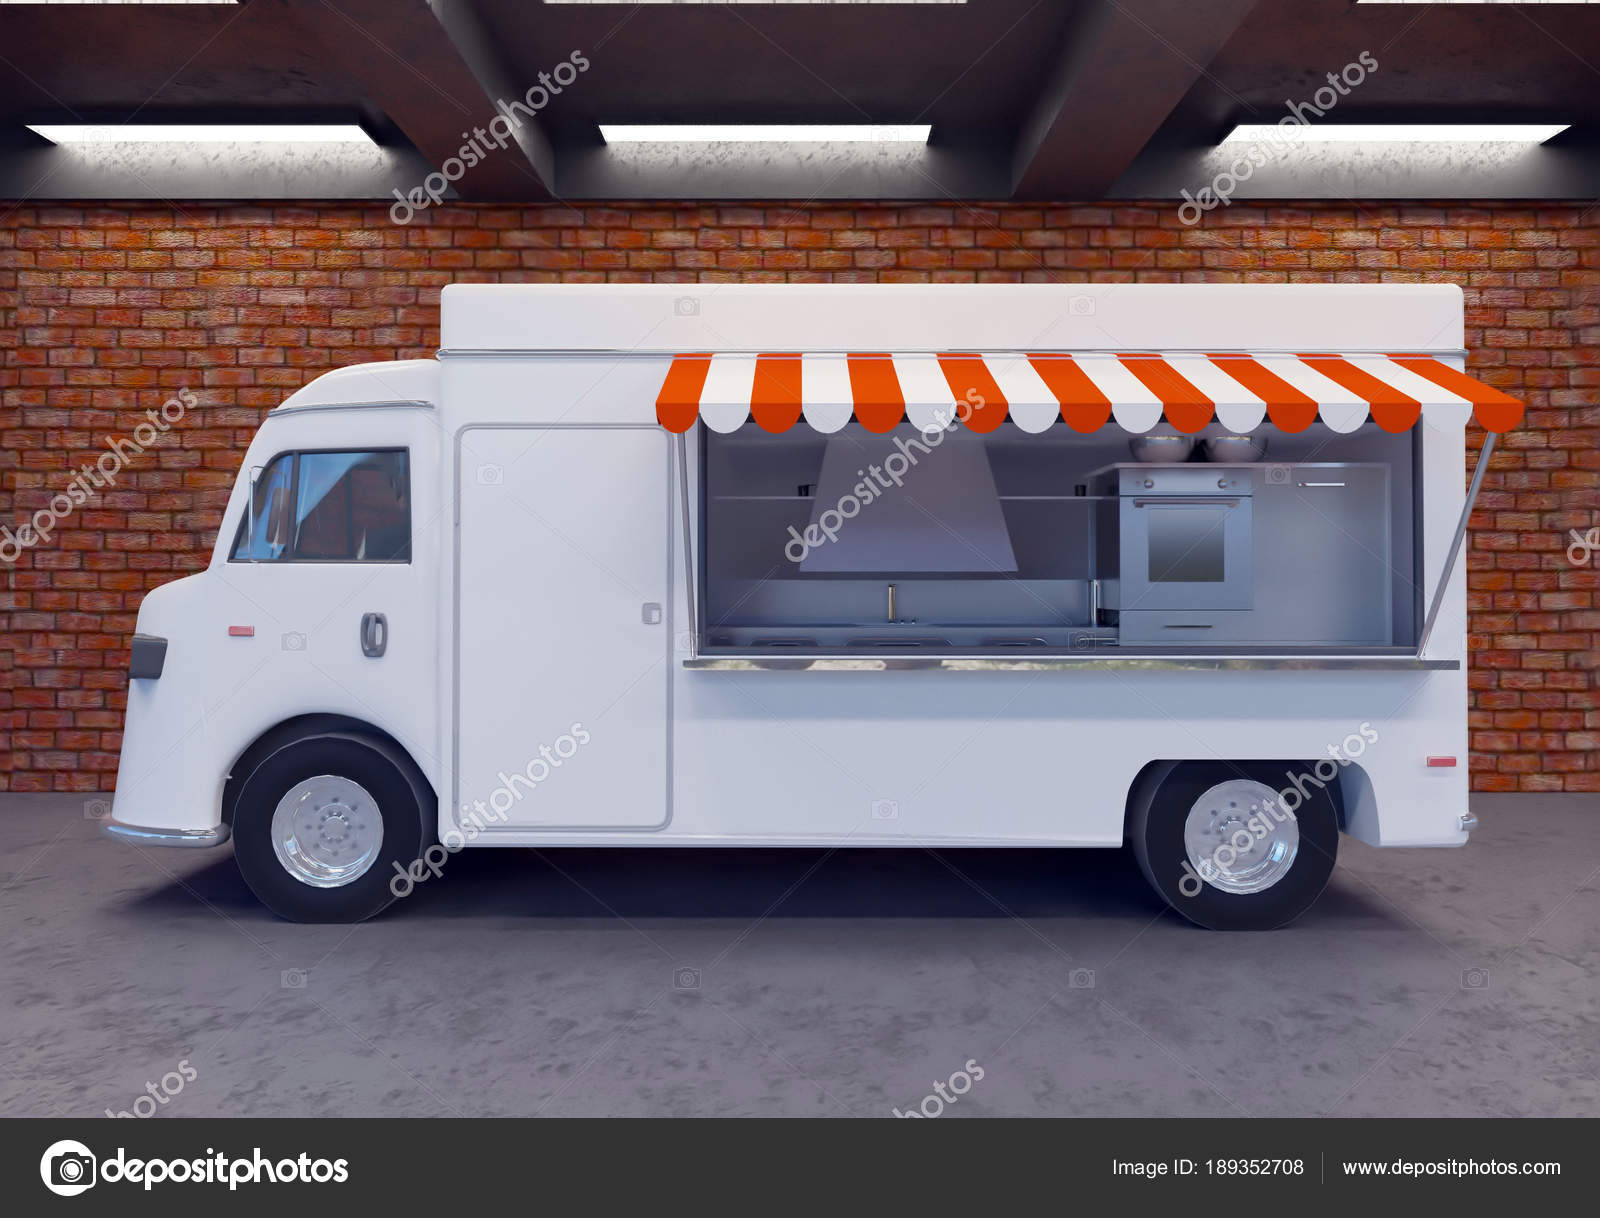 https://st3.depositphotos.com/15357672/18935/i/1600/depositphotos_189352708-stock-photo-3d-illustration-of-food-truck.jpg